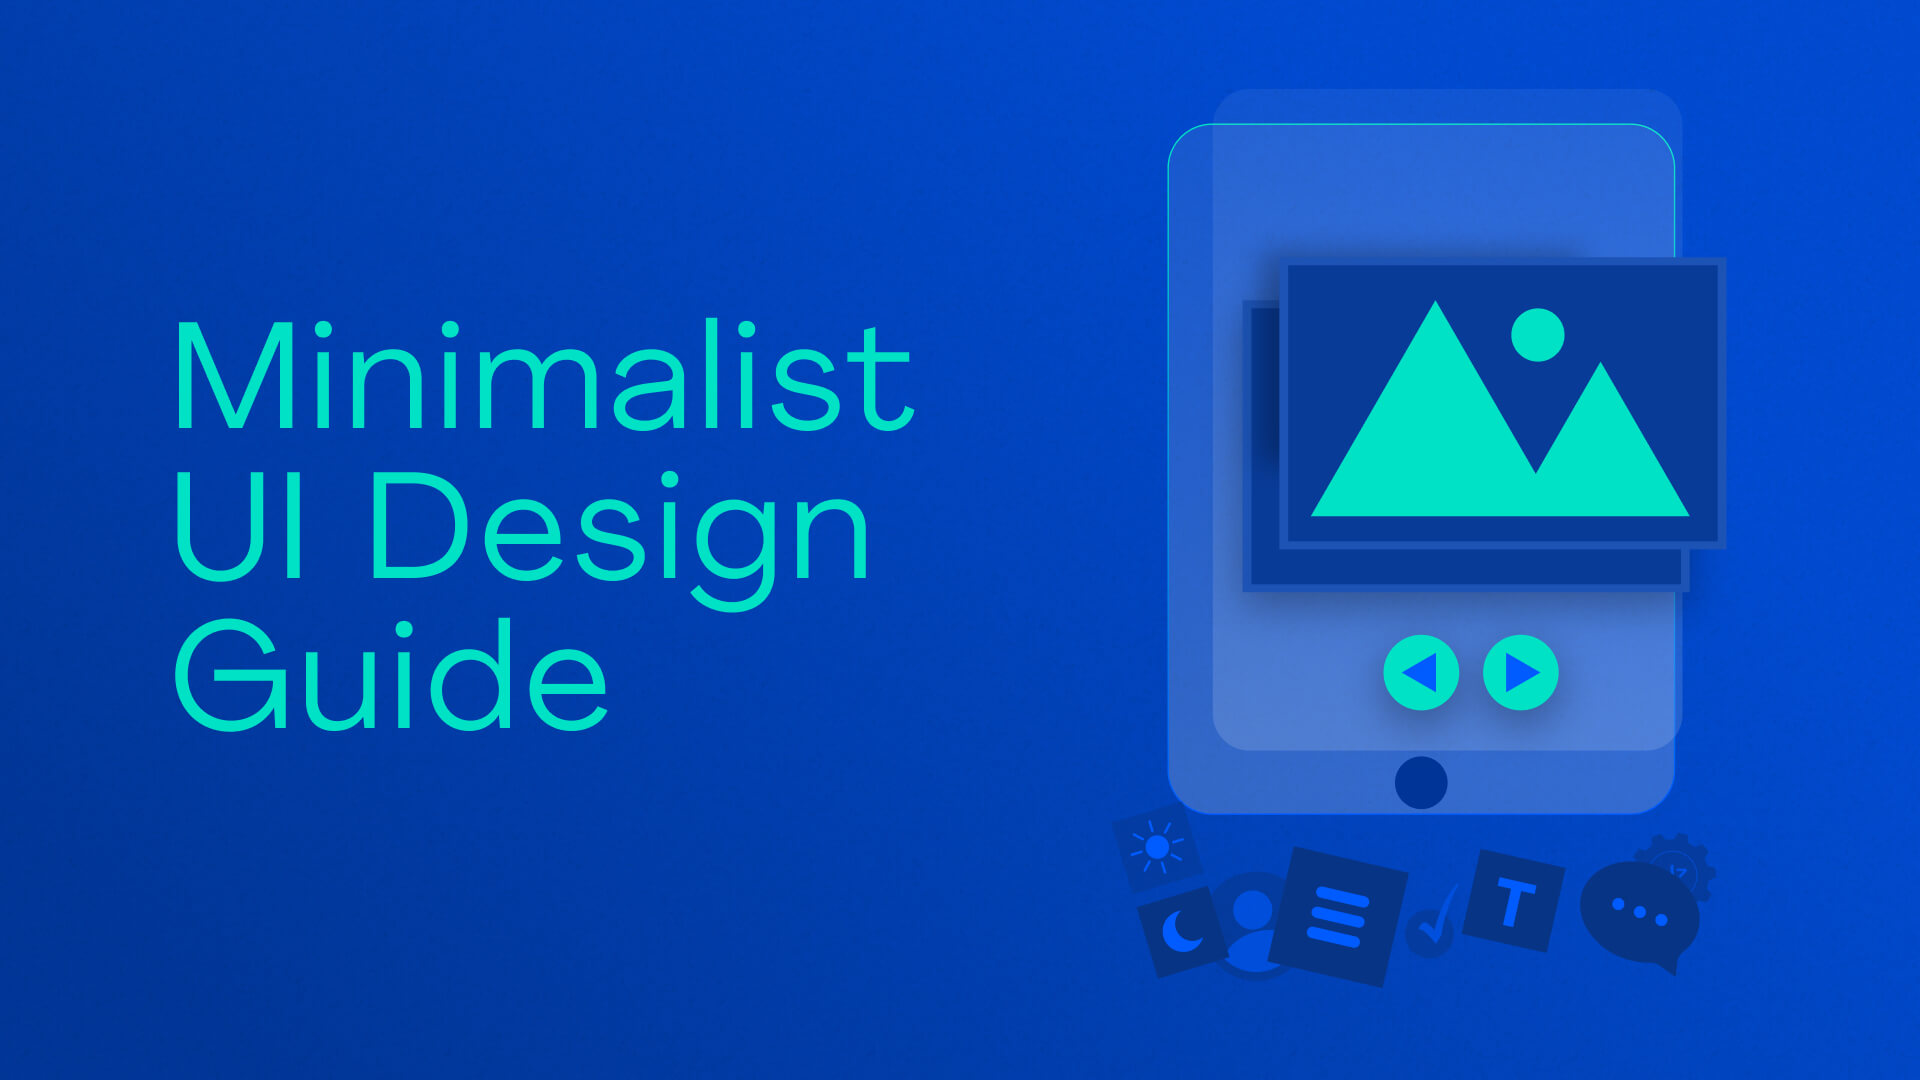 Minimalist UI Design Guide for Mobile App